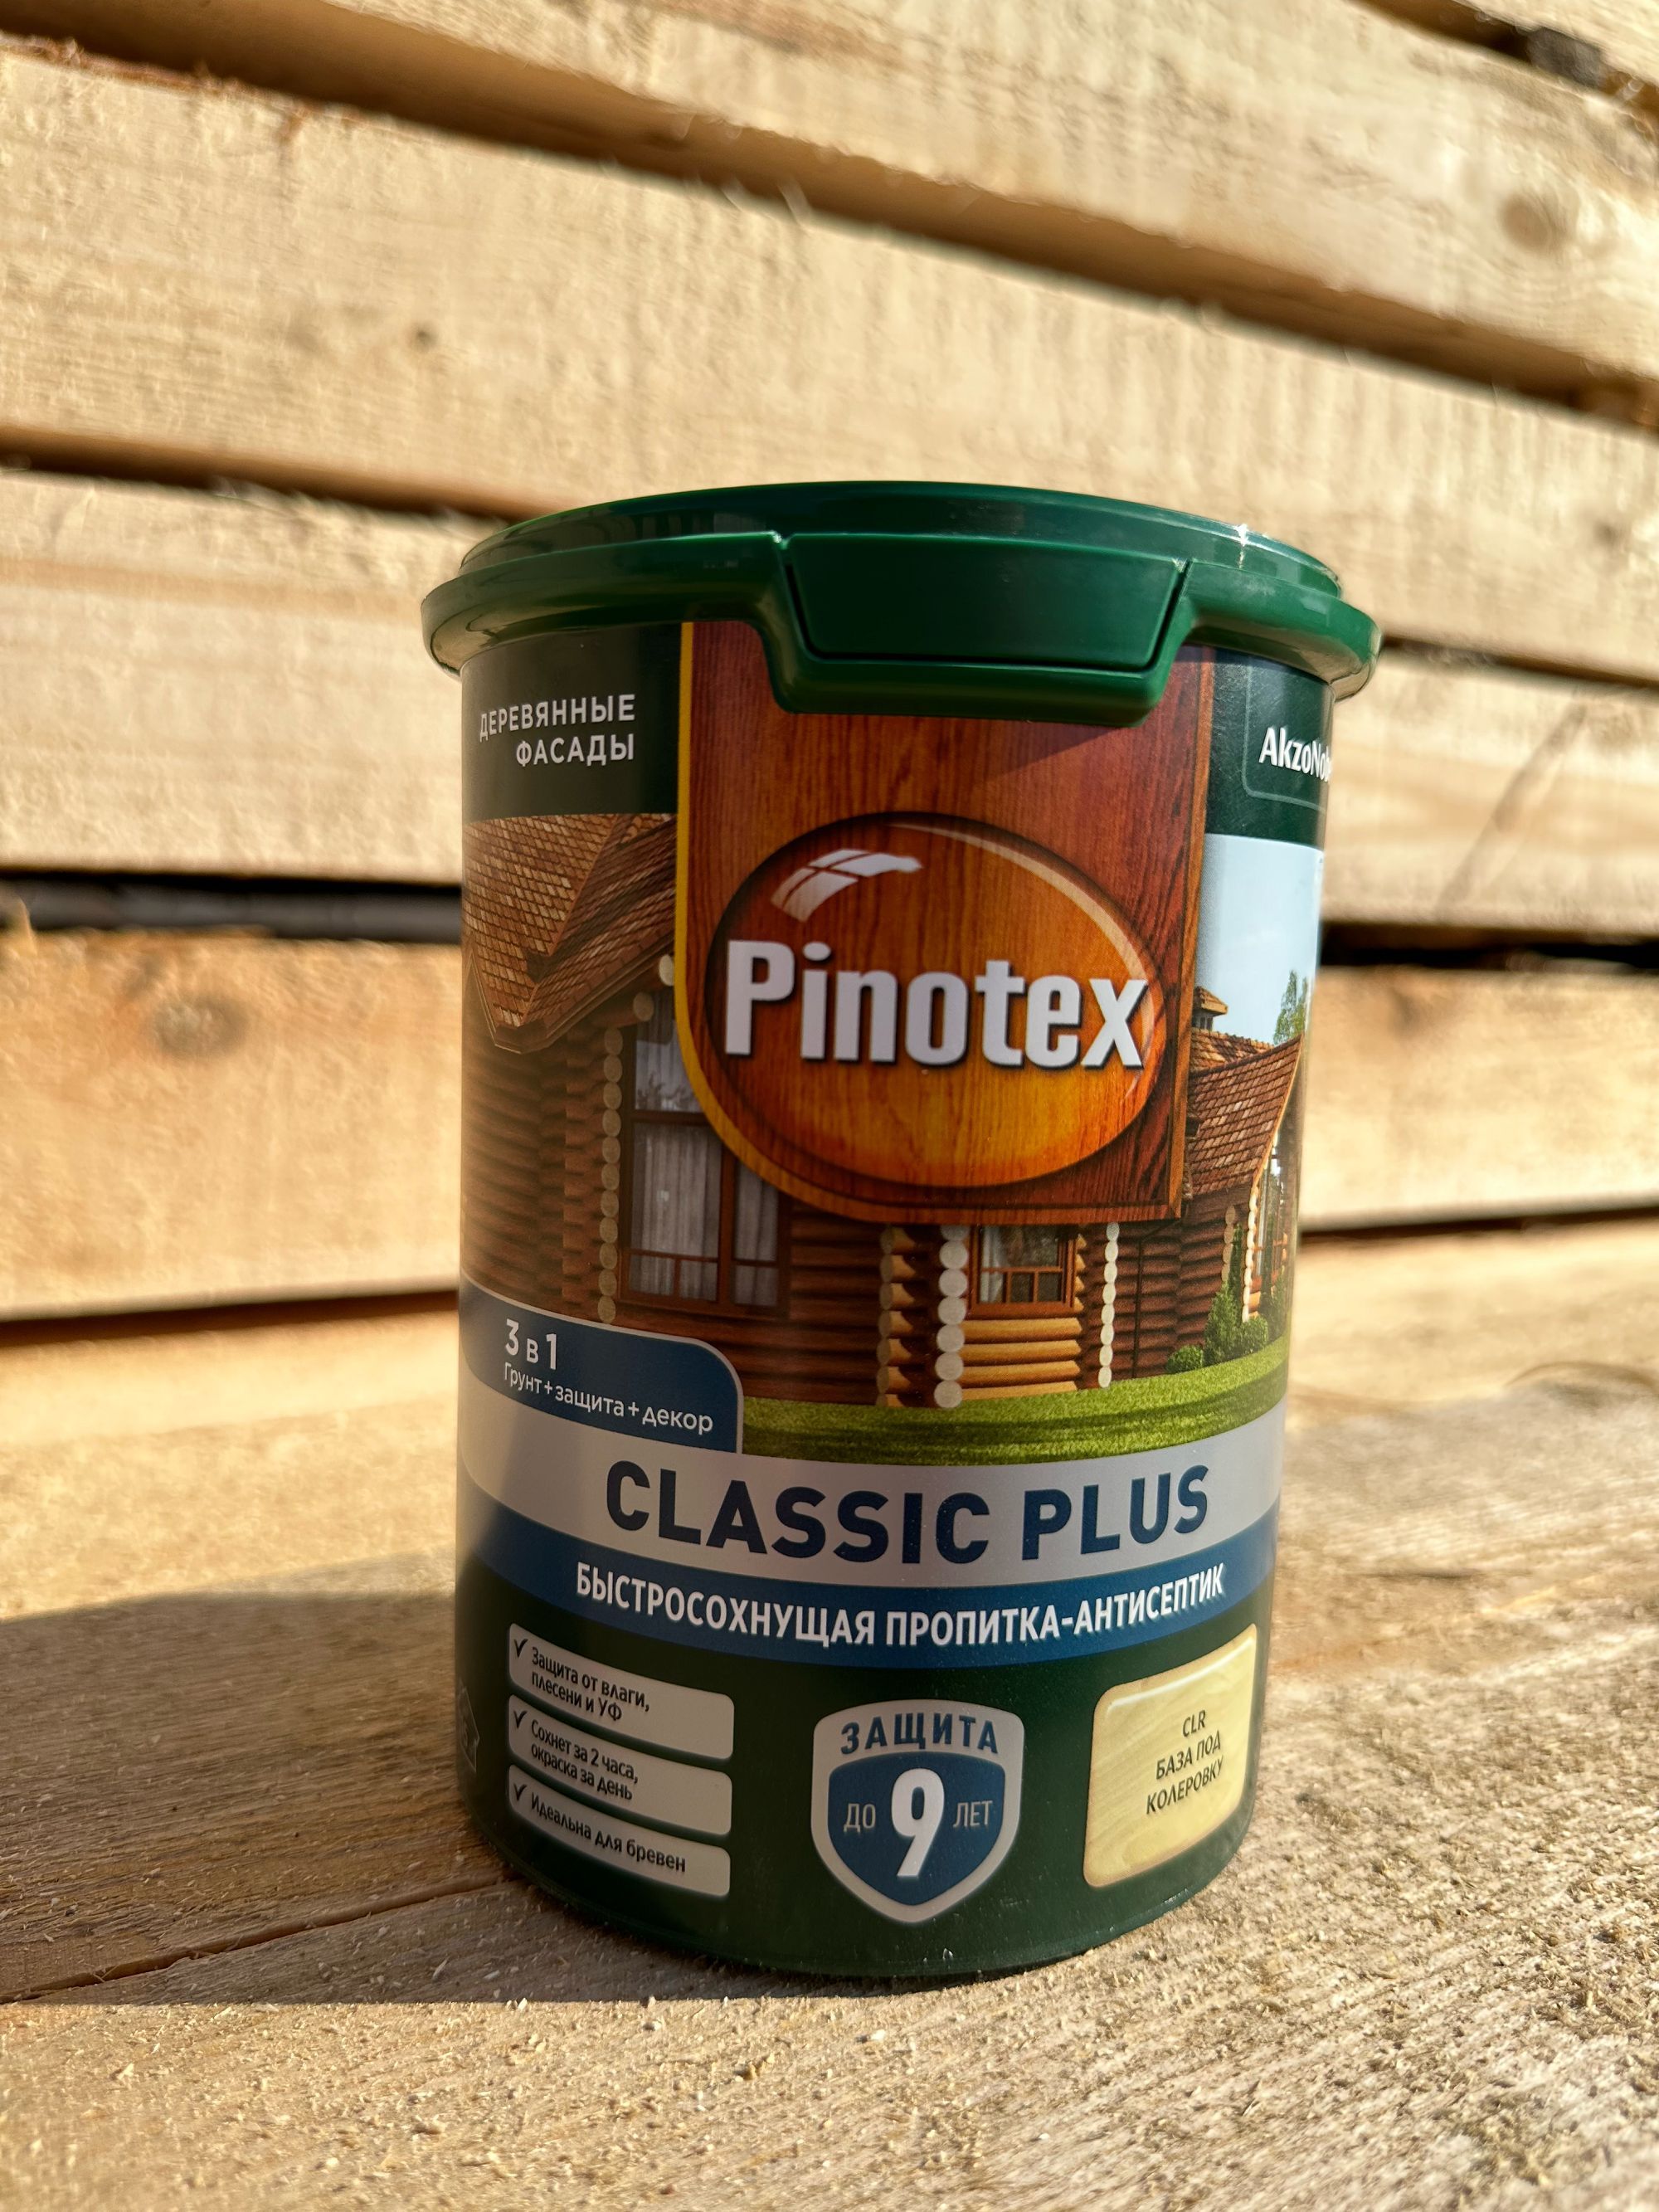 Пропитка pinotex classic plus. Пинотекс Классик плюс. Pinotex Classic Plus 3 в 1. Pinotex осина 009. Пинотекс Classic Plus цвета.